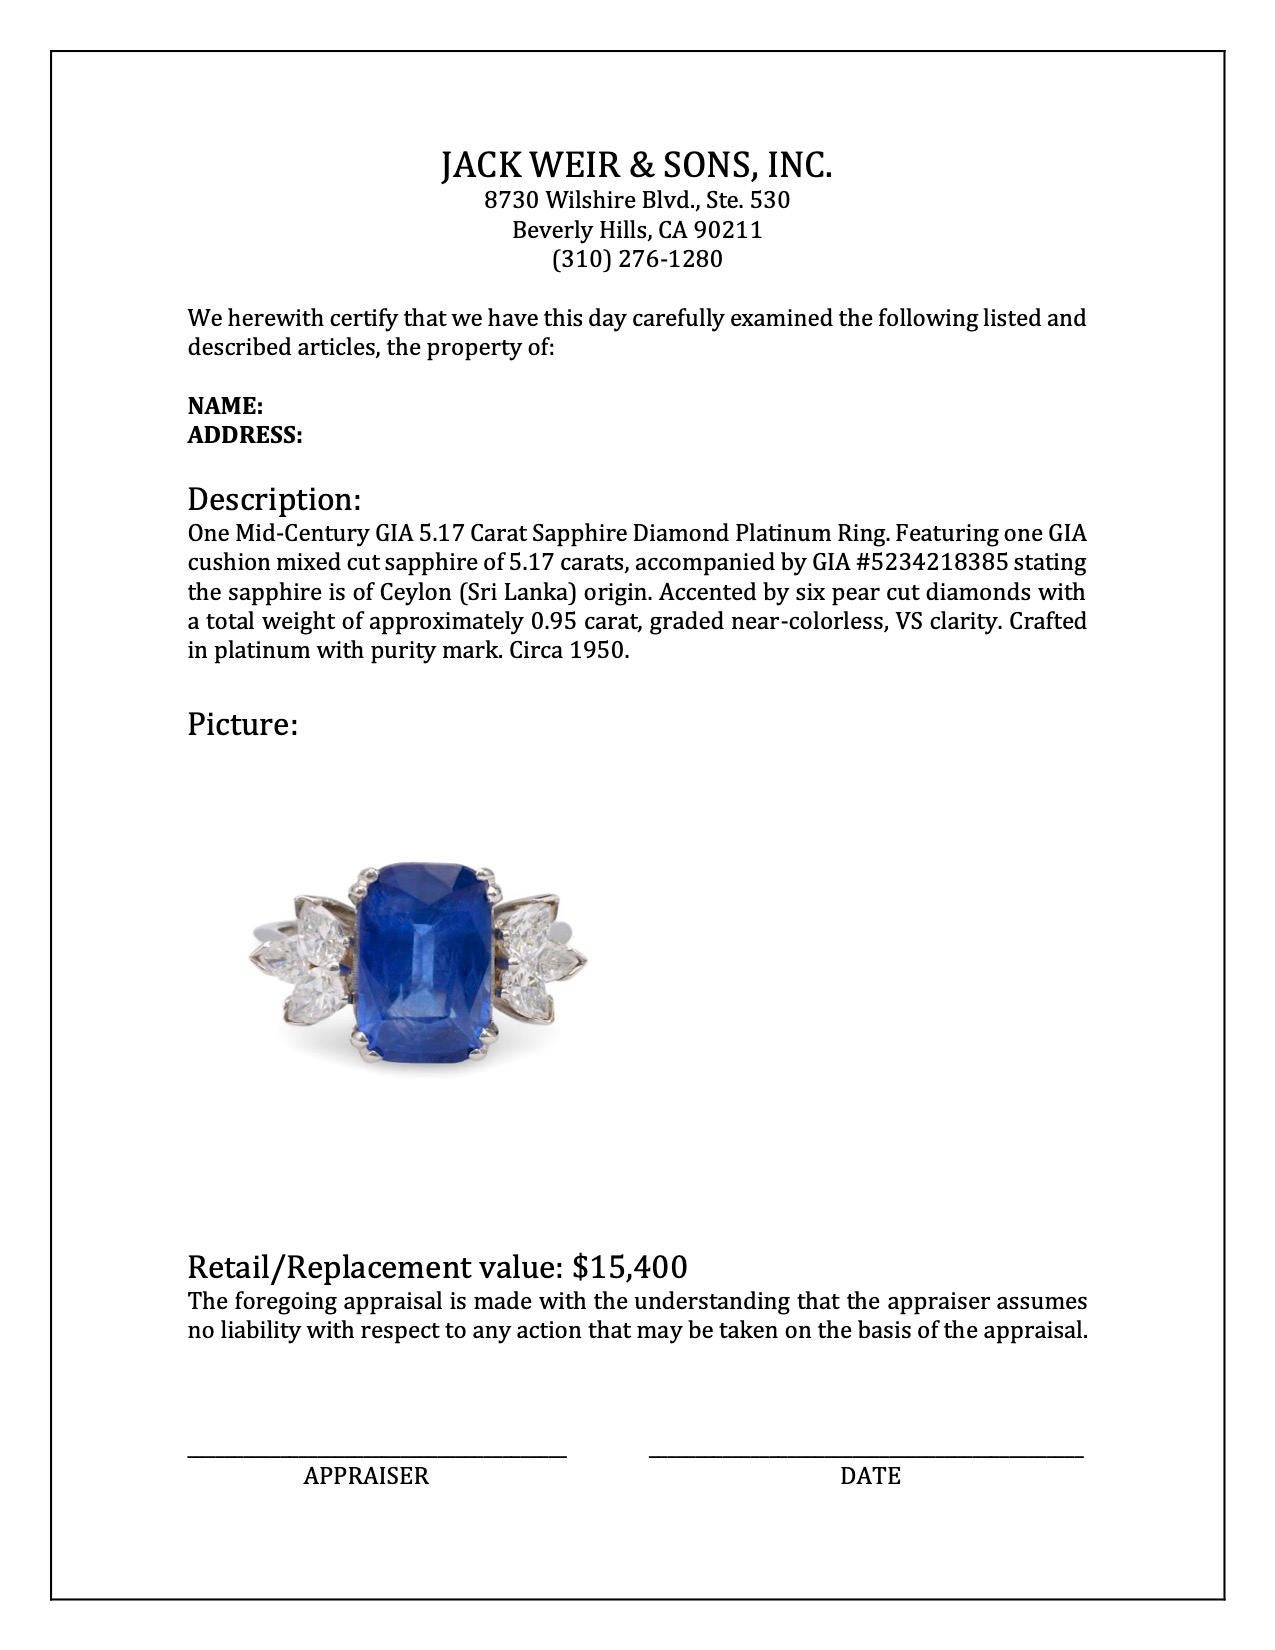 Women's or Men's Mid-Century GIA 5.17 Carat Sapphire Diamond Platinum Ring For Sale